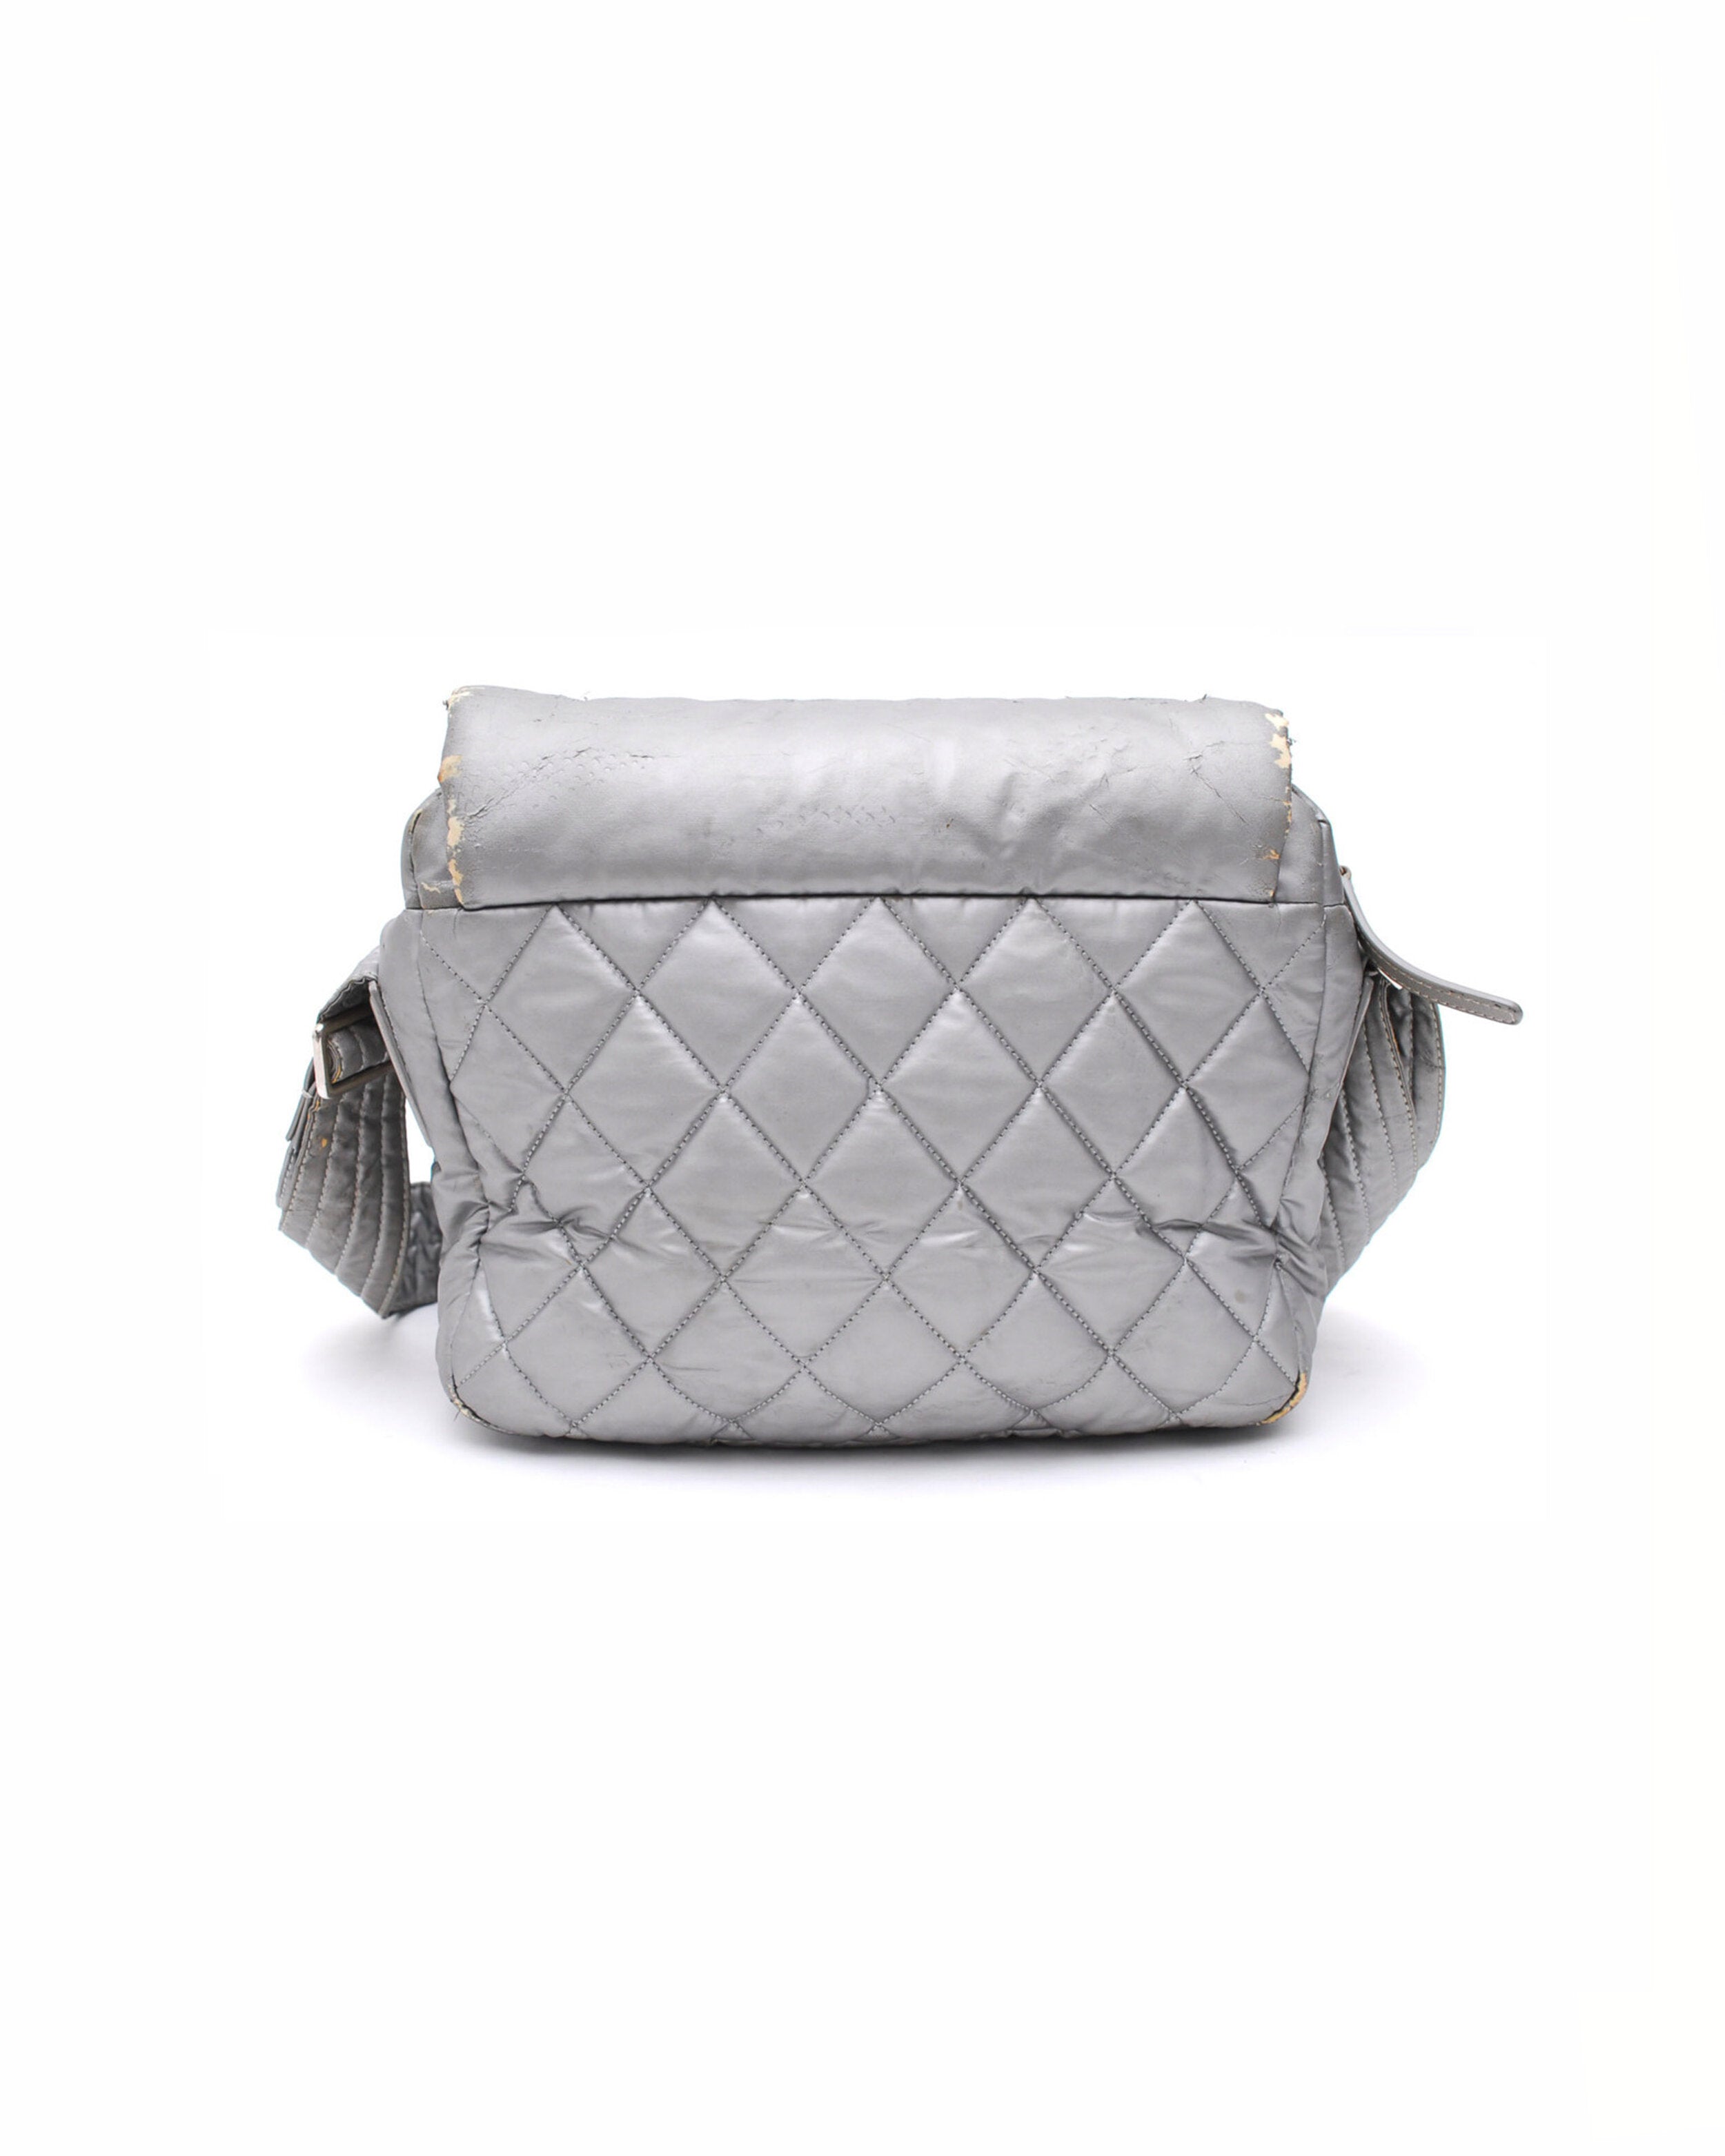 Chanel Silver Sports Messenger Bag